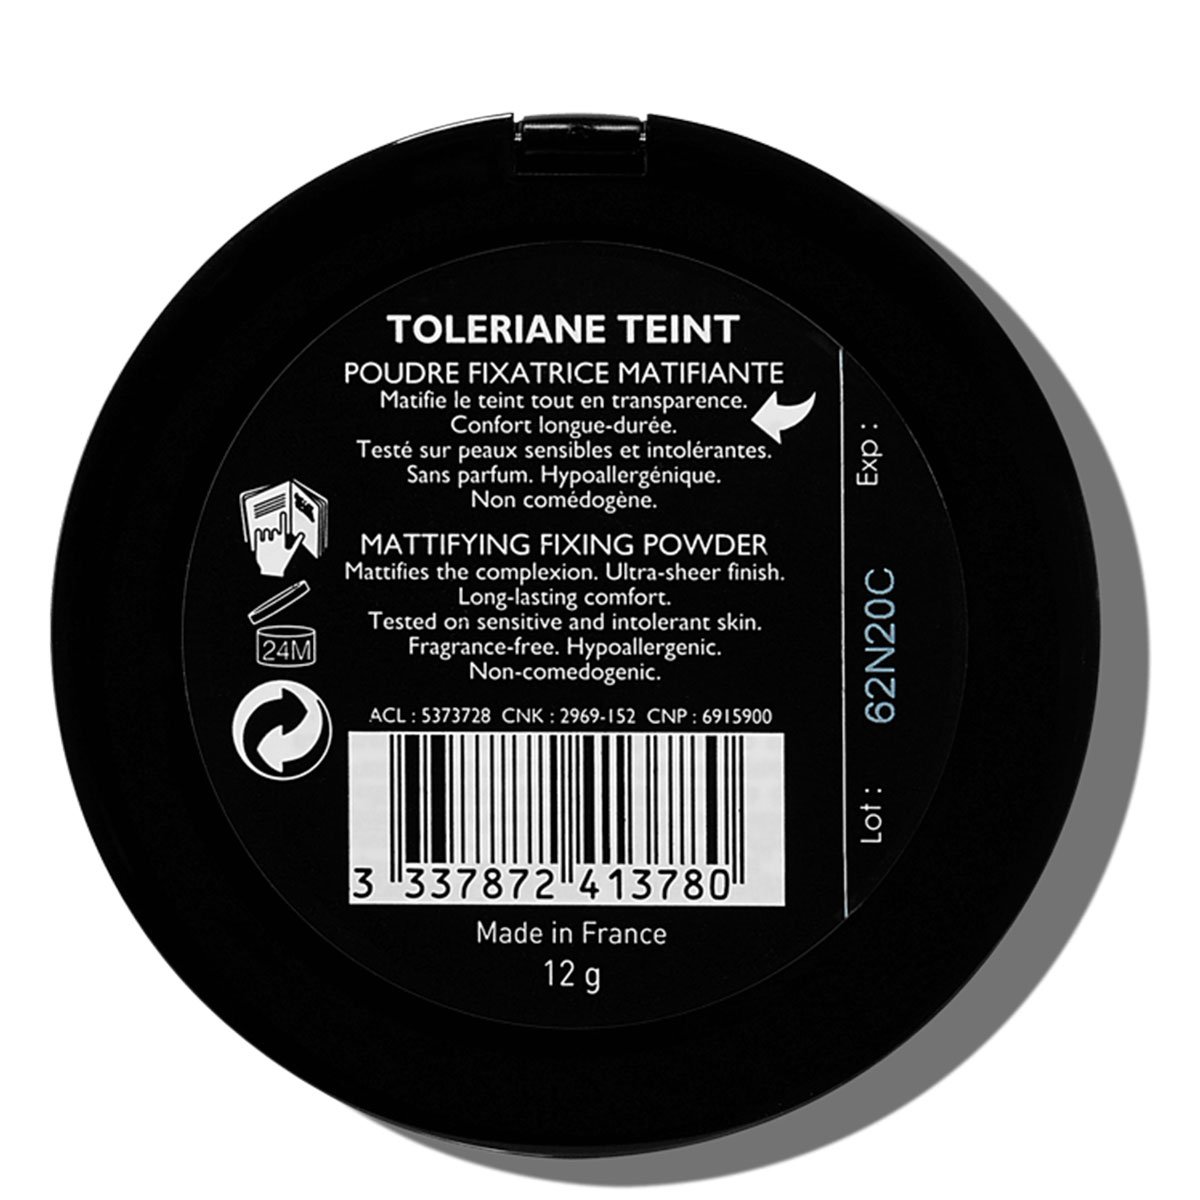 La Roche Posay Sensitive Toleriane Make up TEINT_Fixation 3337872413780